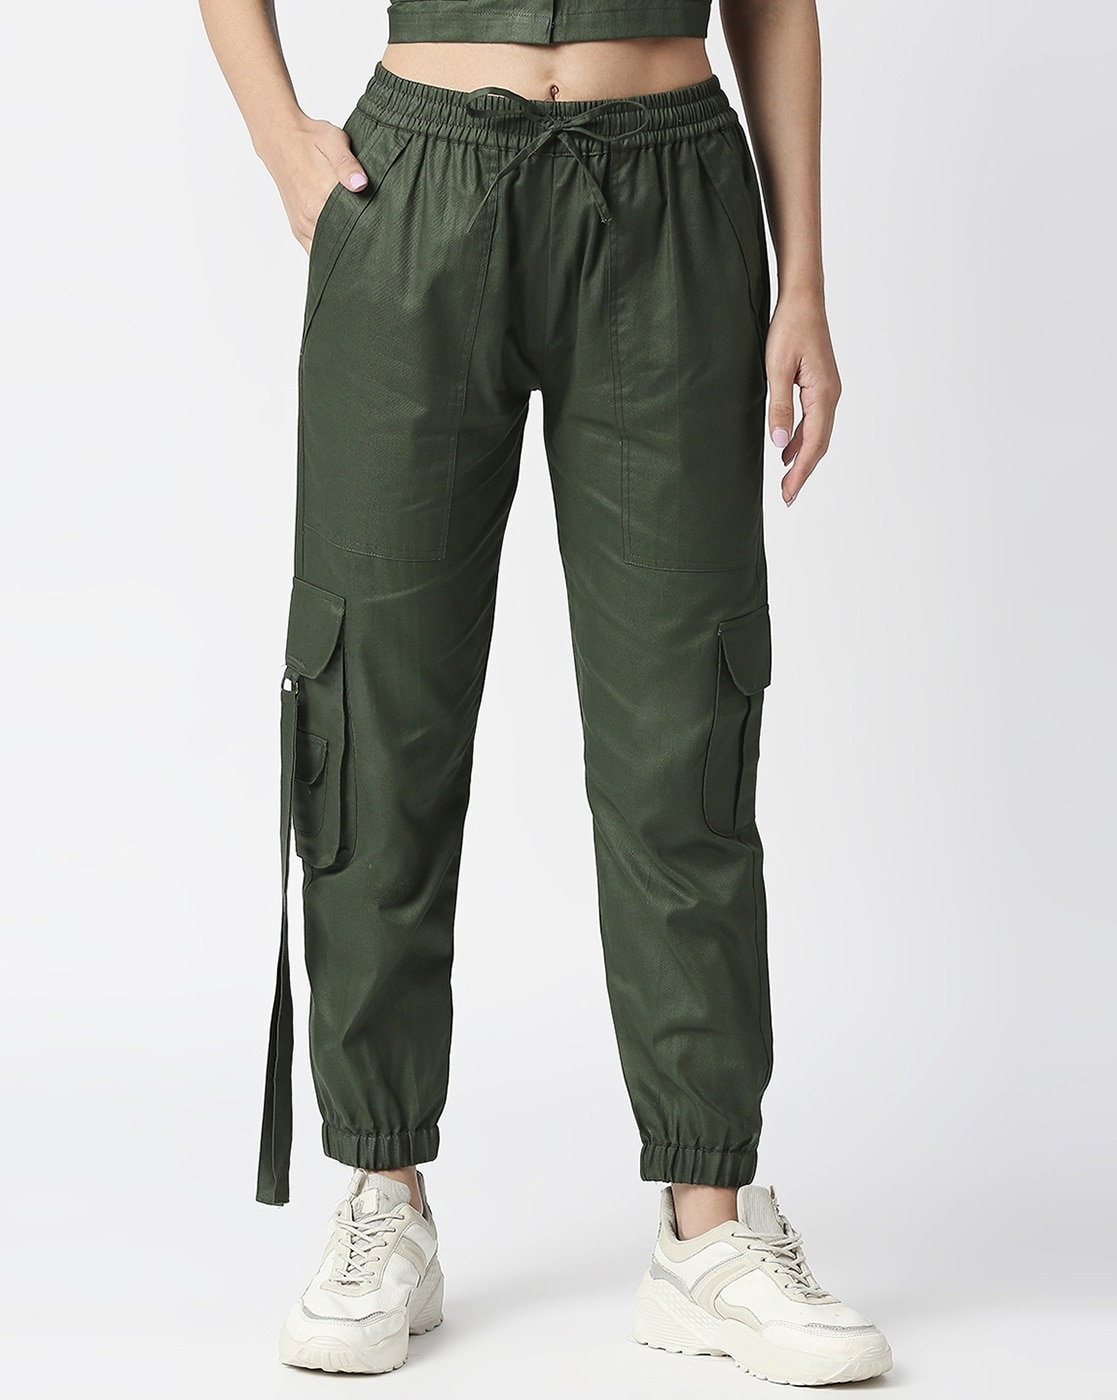 Buy Green Trousers  Pants for Women by REMANIKA Online  Ajiocom